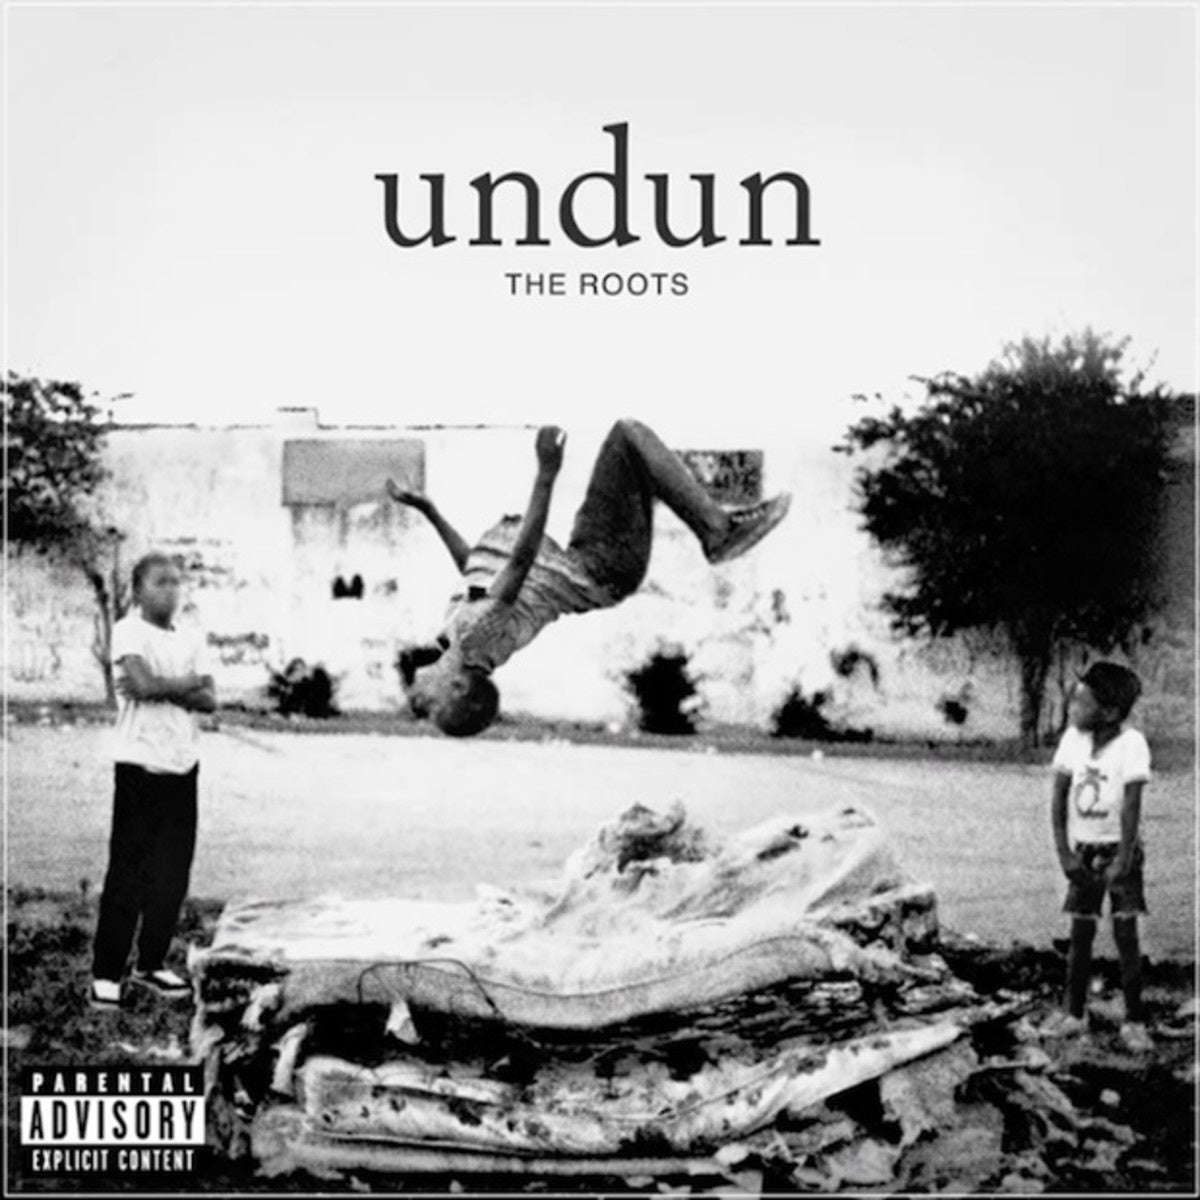 The Roots - Undun - New Vinyl Lp 2018 Def Jam 'Urban Legends' Reissue with Gatefold Jacket - Hip Hop